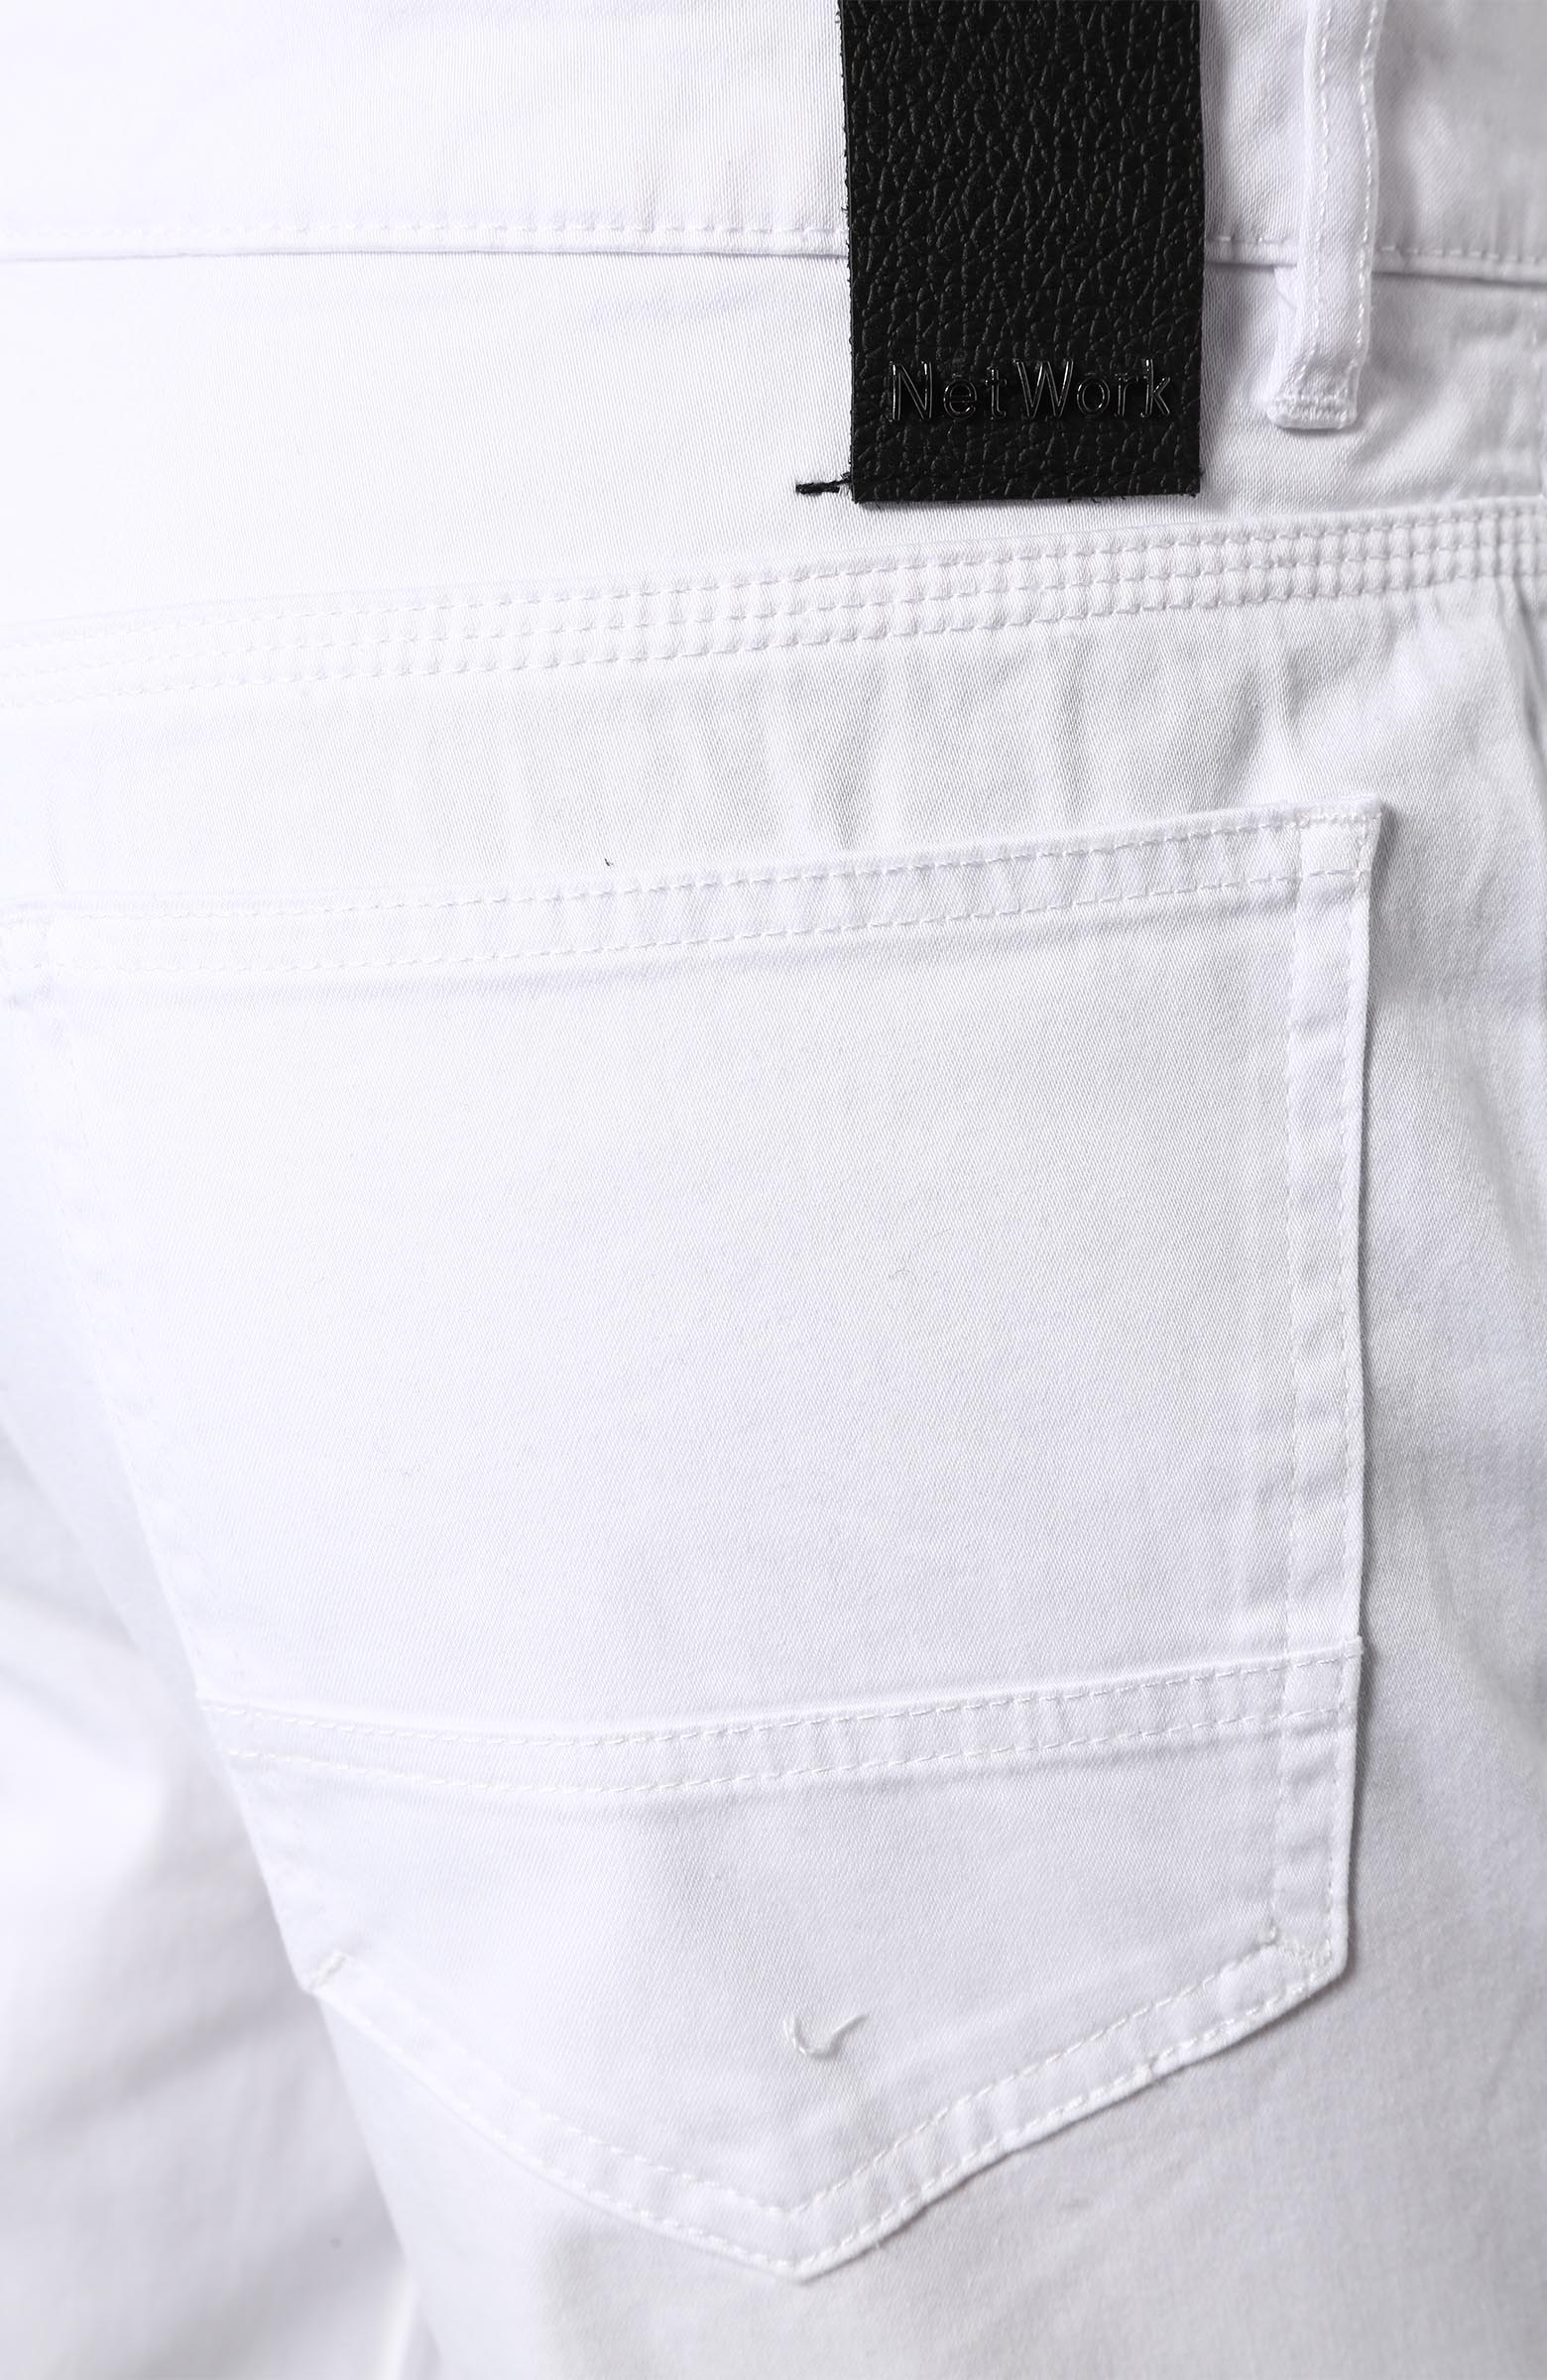 Skinny Fit Beyaz Casual Pantolon